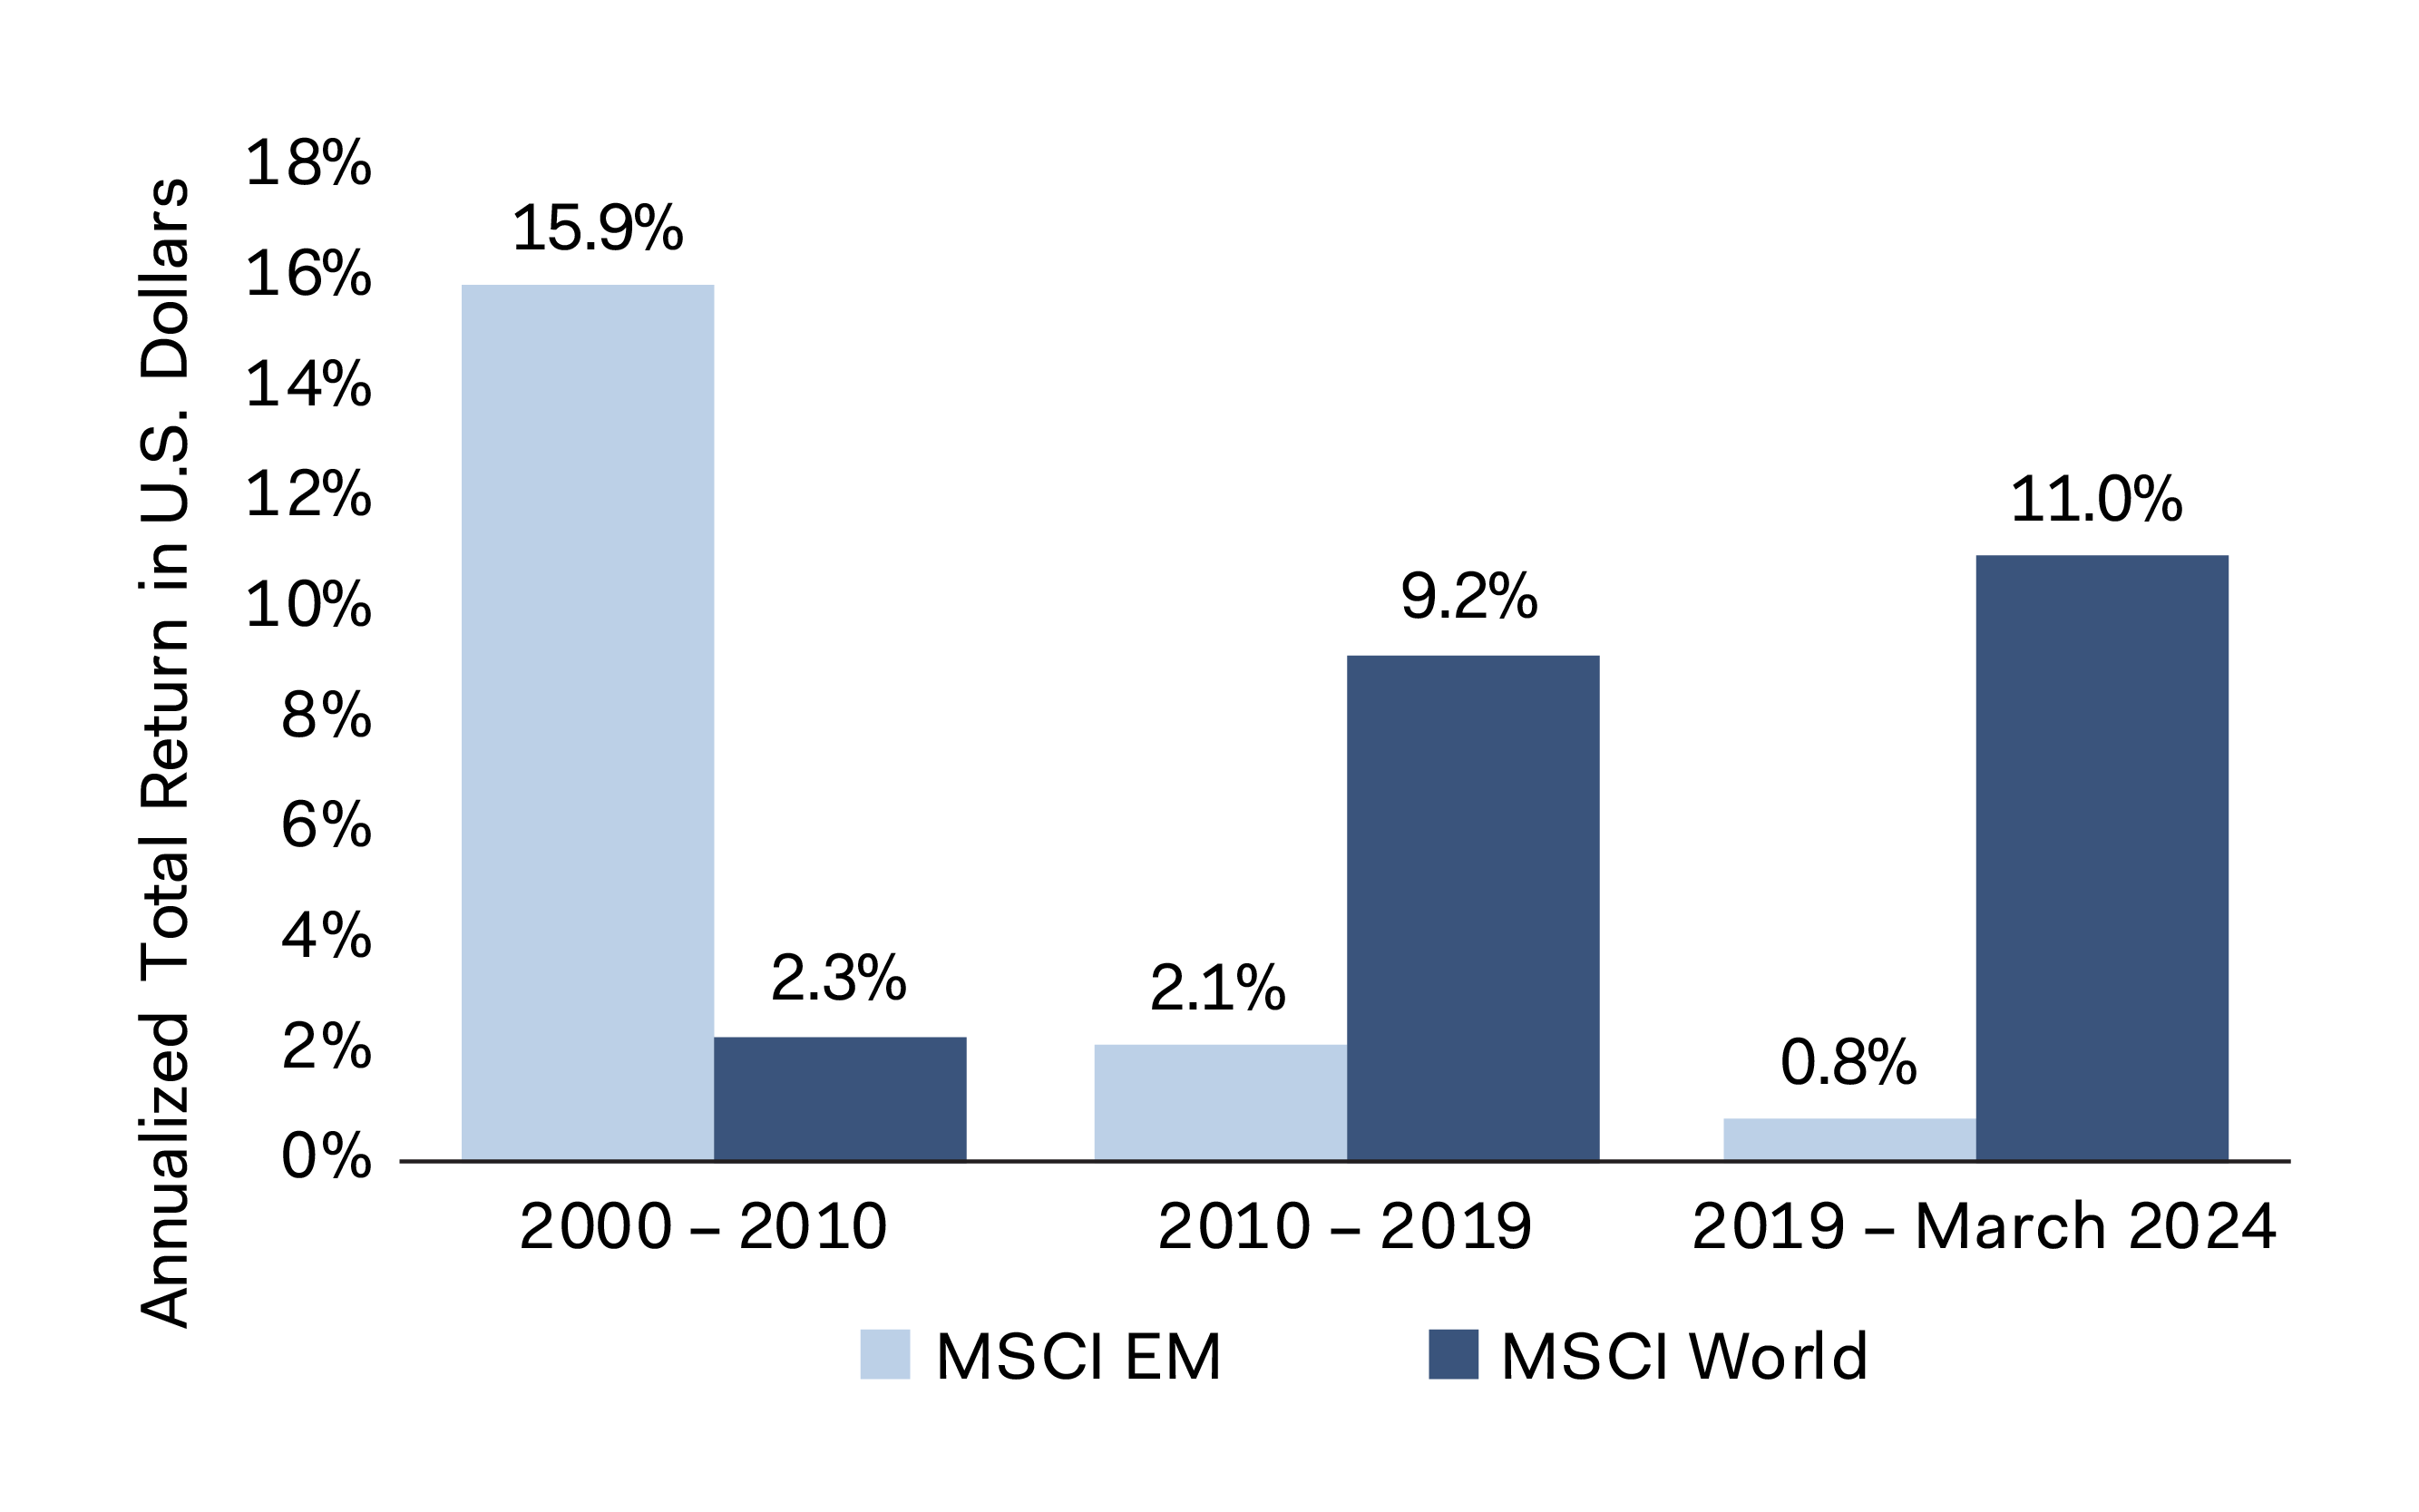 Figure 1. MSCI EM Outperformed Significantly in 2000-2010